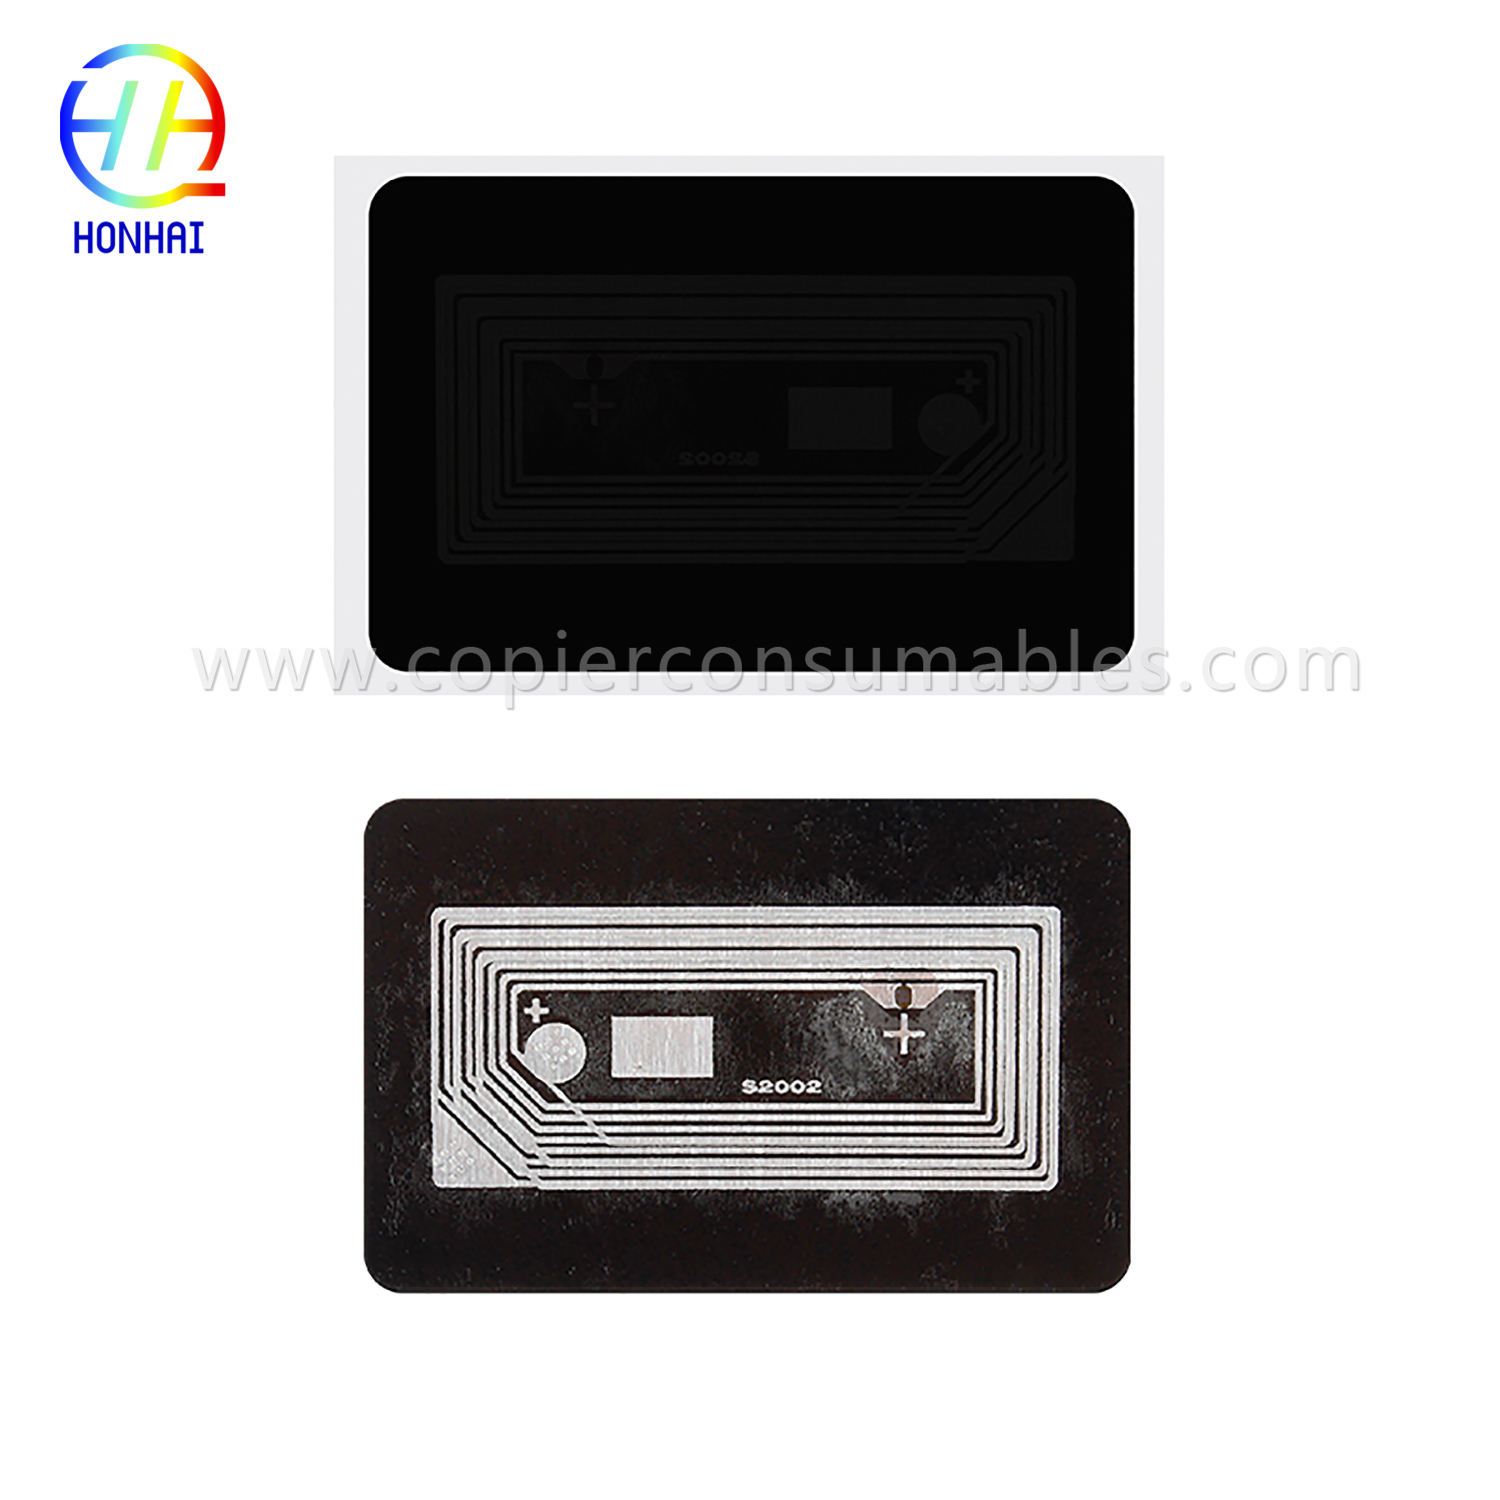 Tinte Cartridge Chip pro Kyocera Fs-1030mfp 1030mfp Dp 1130mfp (TK-1130 1131 1132 1133 1134)